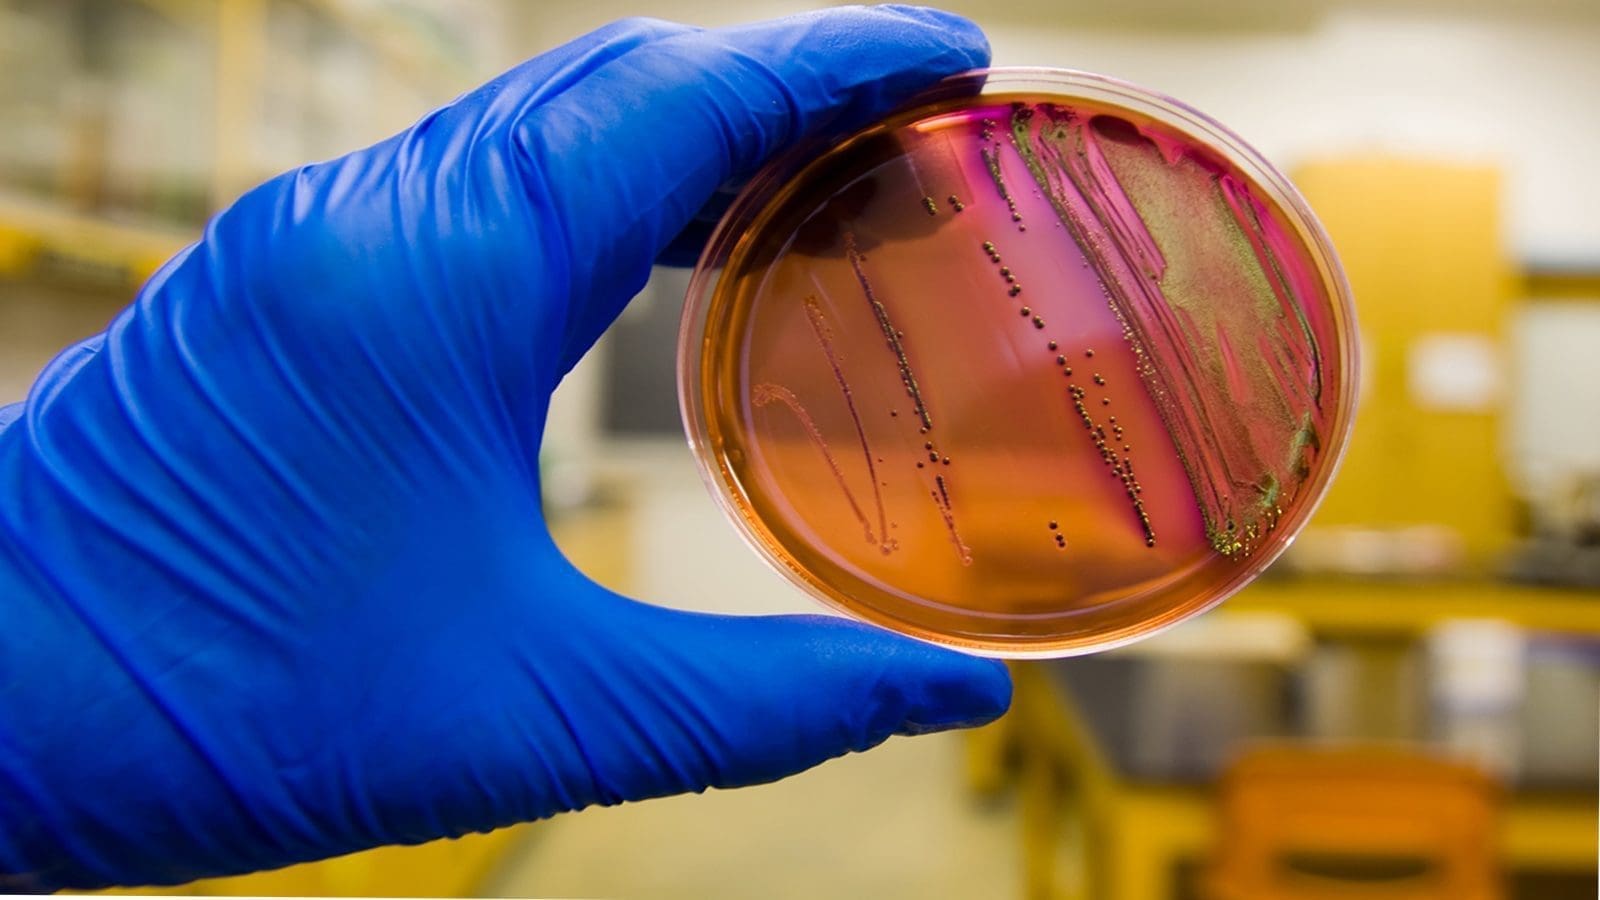 Santé publique France looks into increased cases of hemolytic uremic syndrome, E.coli